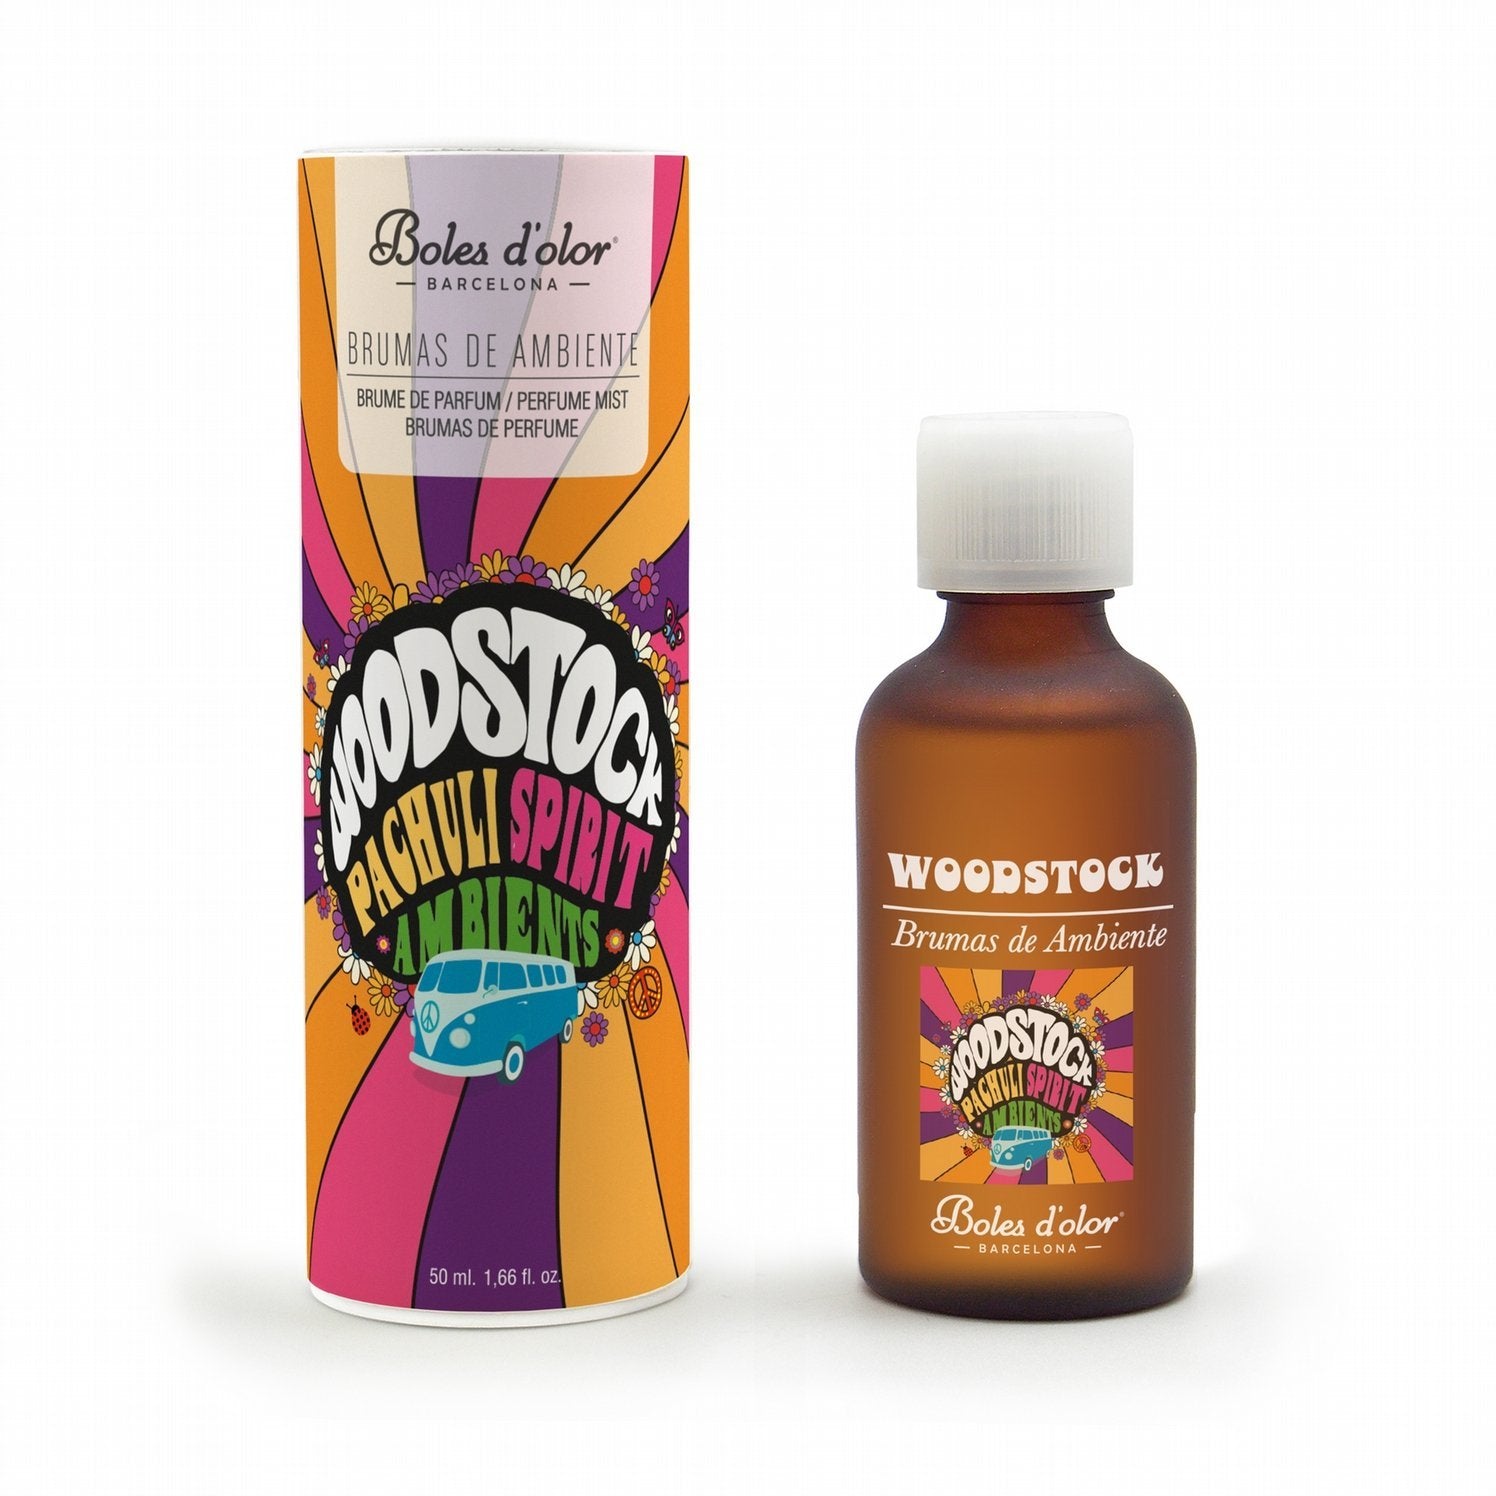 Boles d'olor Woodstock Brumas de Ambiente Essence (50ml) - Boles d'olor Fragrance Mist Oils & Mist Diffusers from thetraditionalgiftshop.com